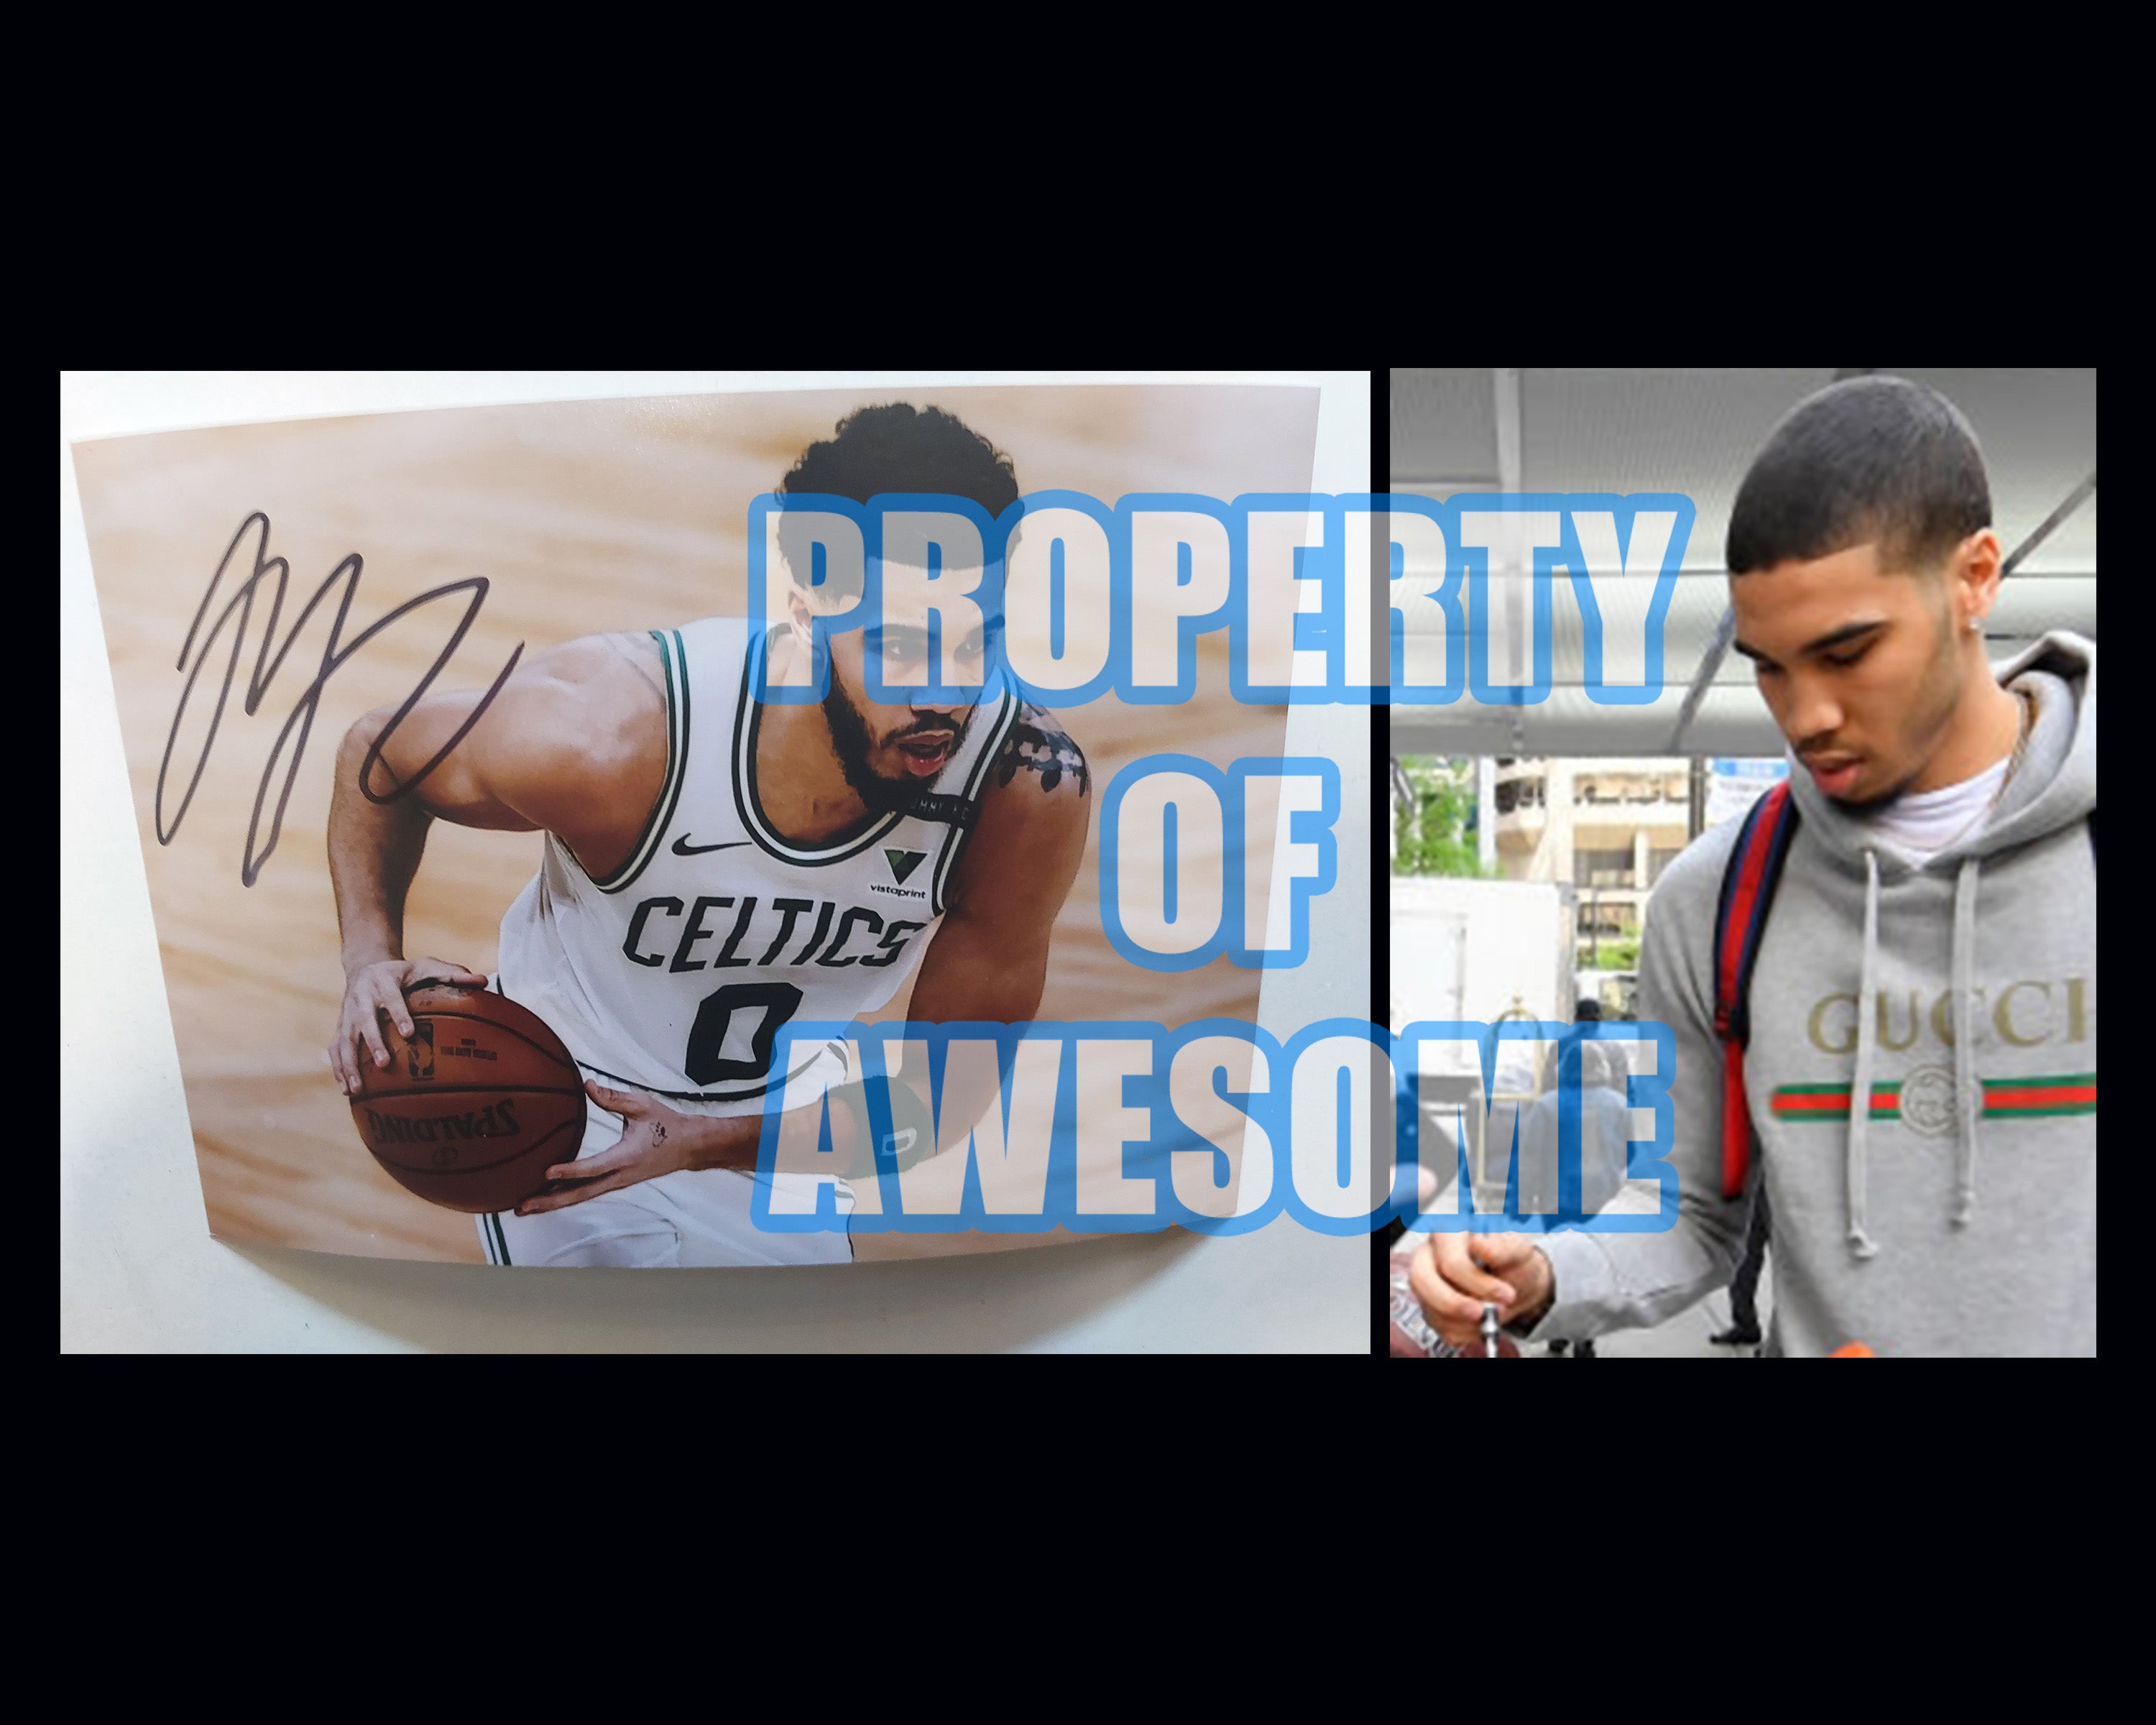 Jayson Tatum Boston Celtics 5 x 7 photo signed